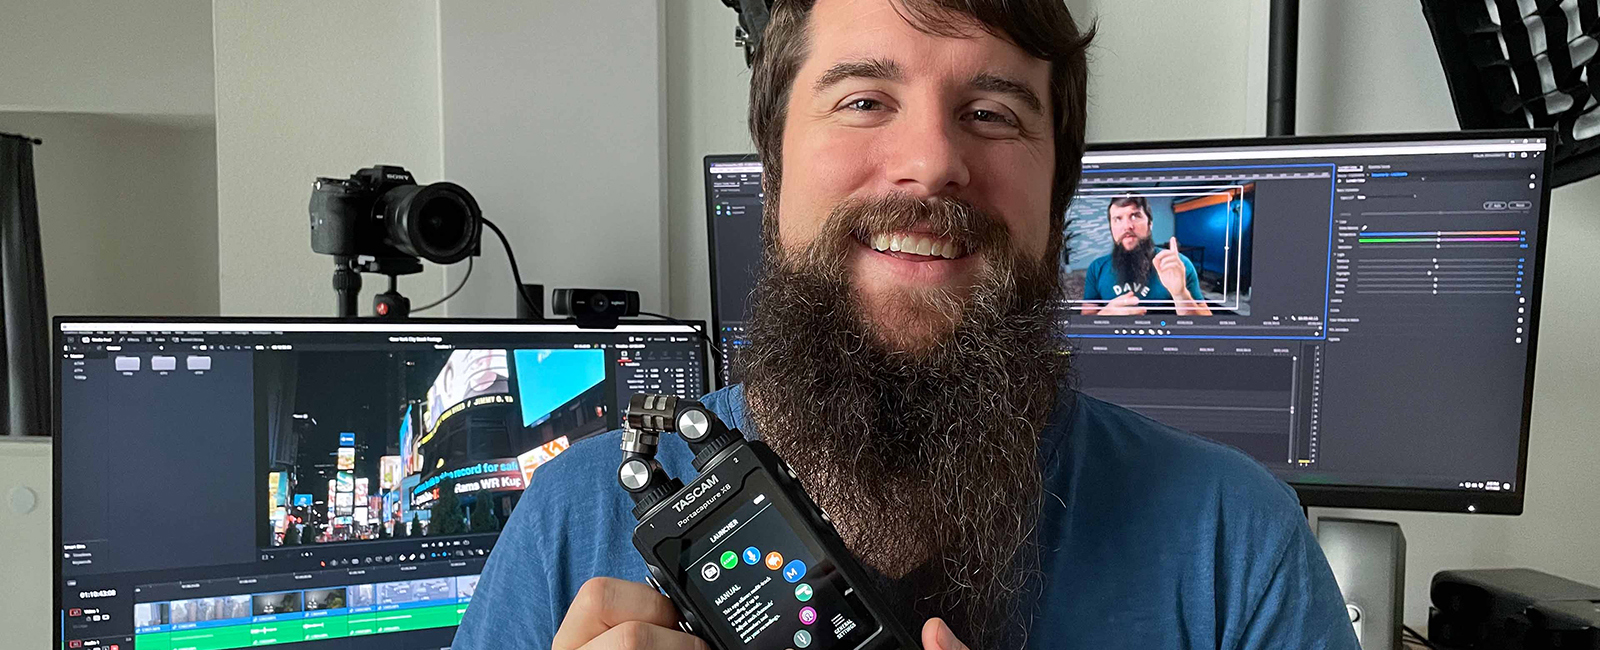 The TASCAM Portacapture X8 Multi-track Handheld Recorder Brings Creative Opportunity to Matt Johnson